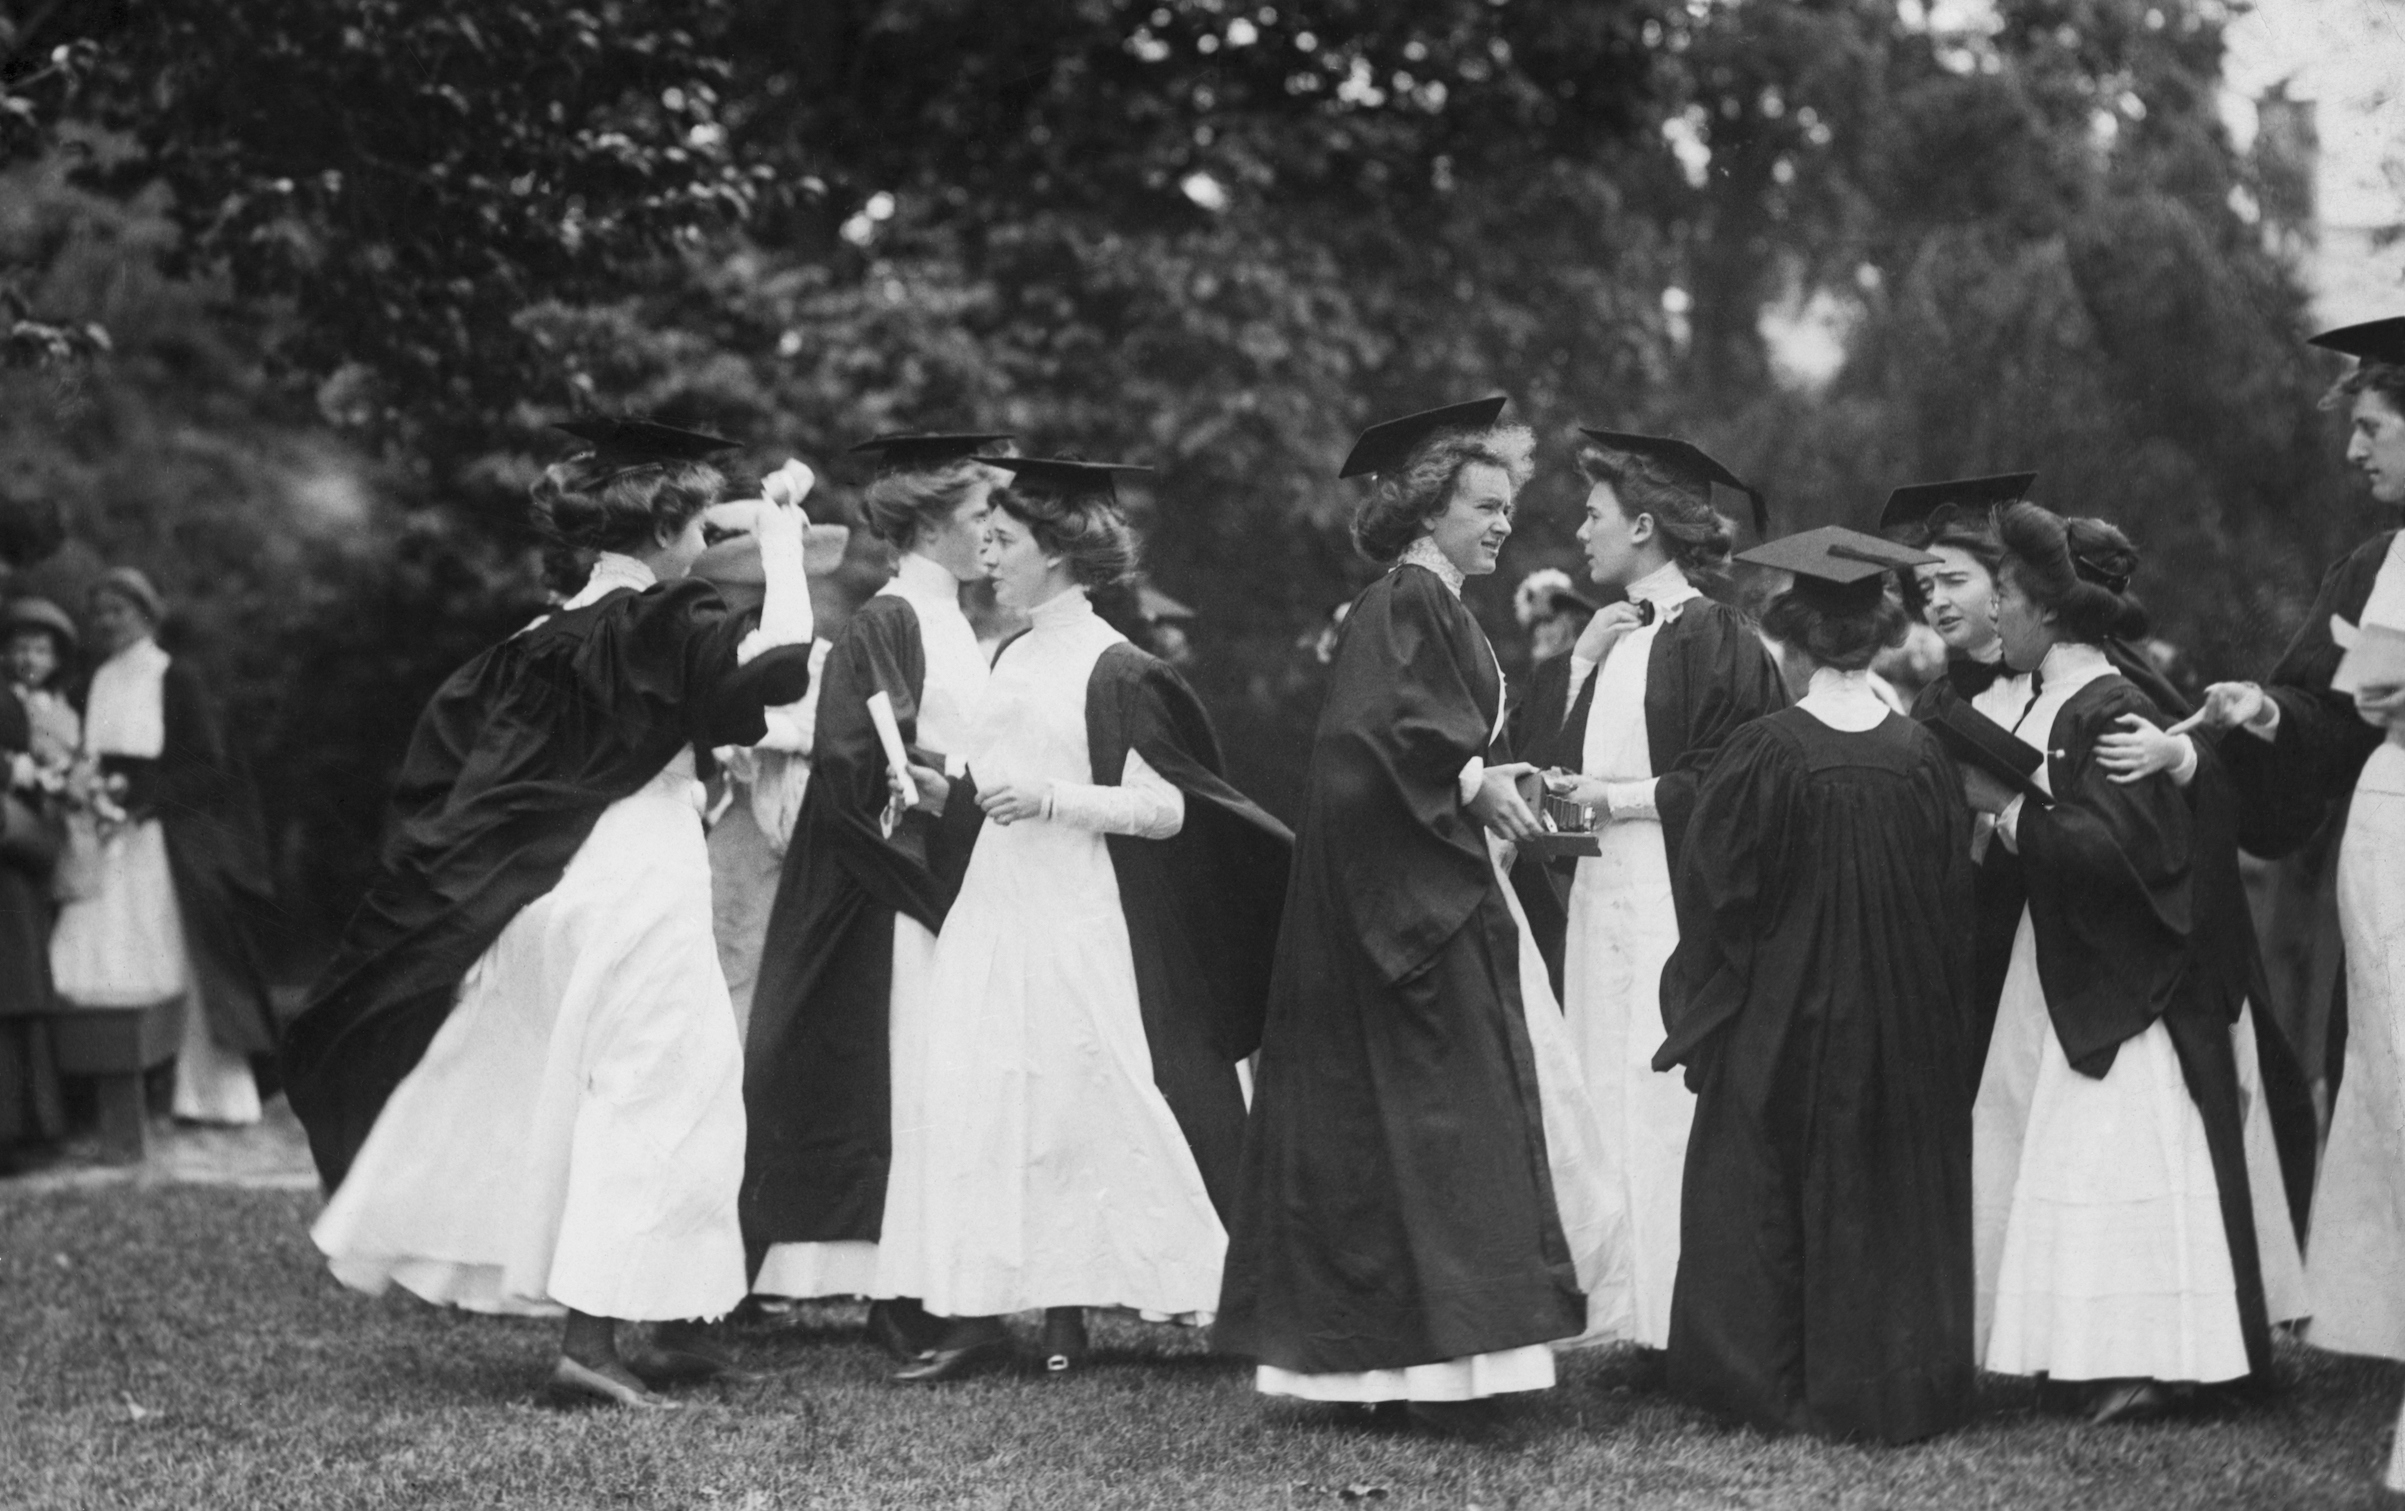 Women graduates exiting after a graduation ceremony. Photograph, ca. 1900. (Bettmann Archive/Getty Images)